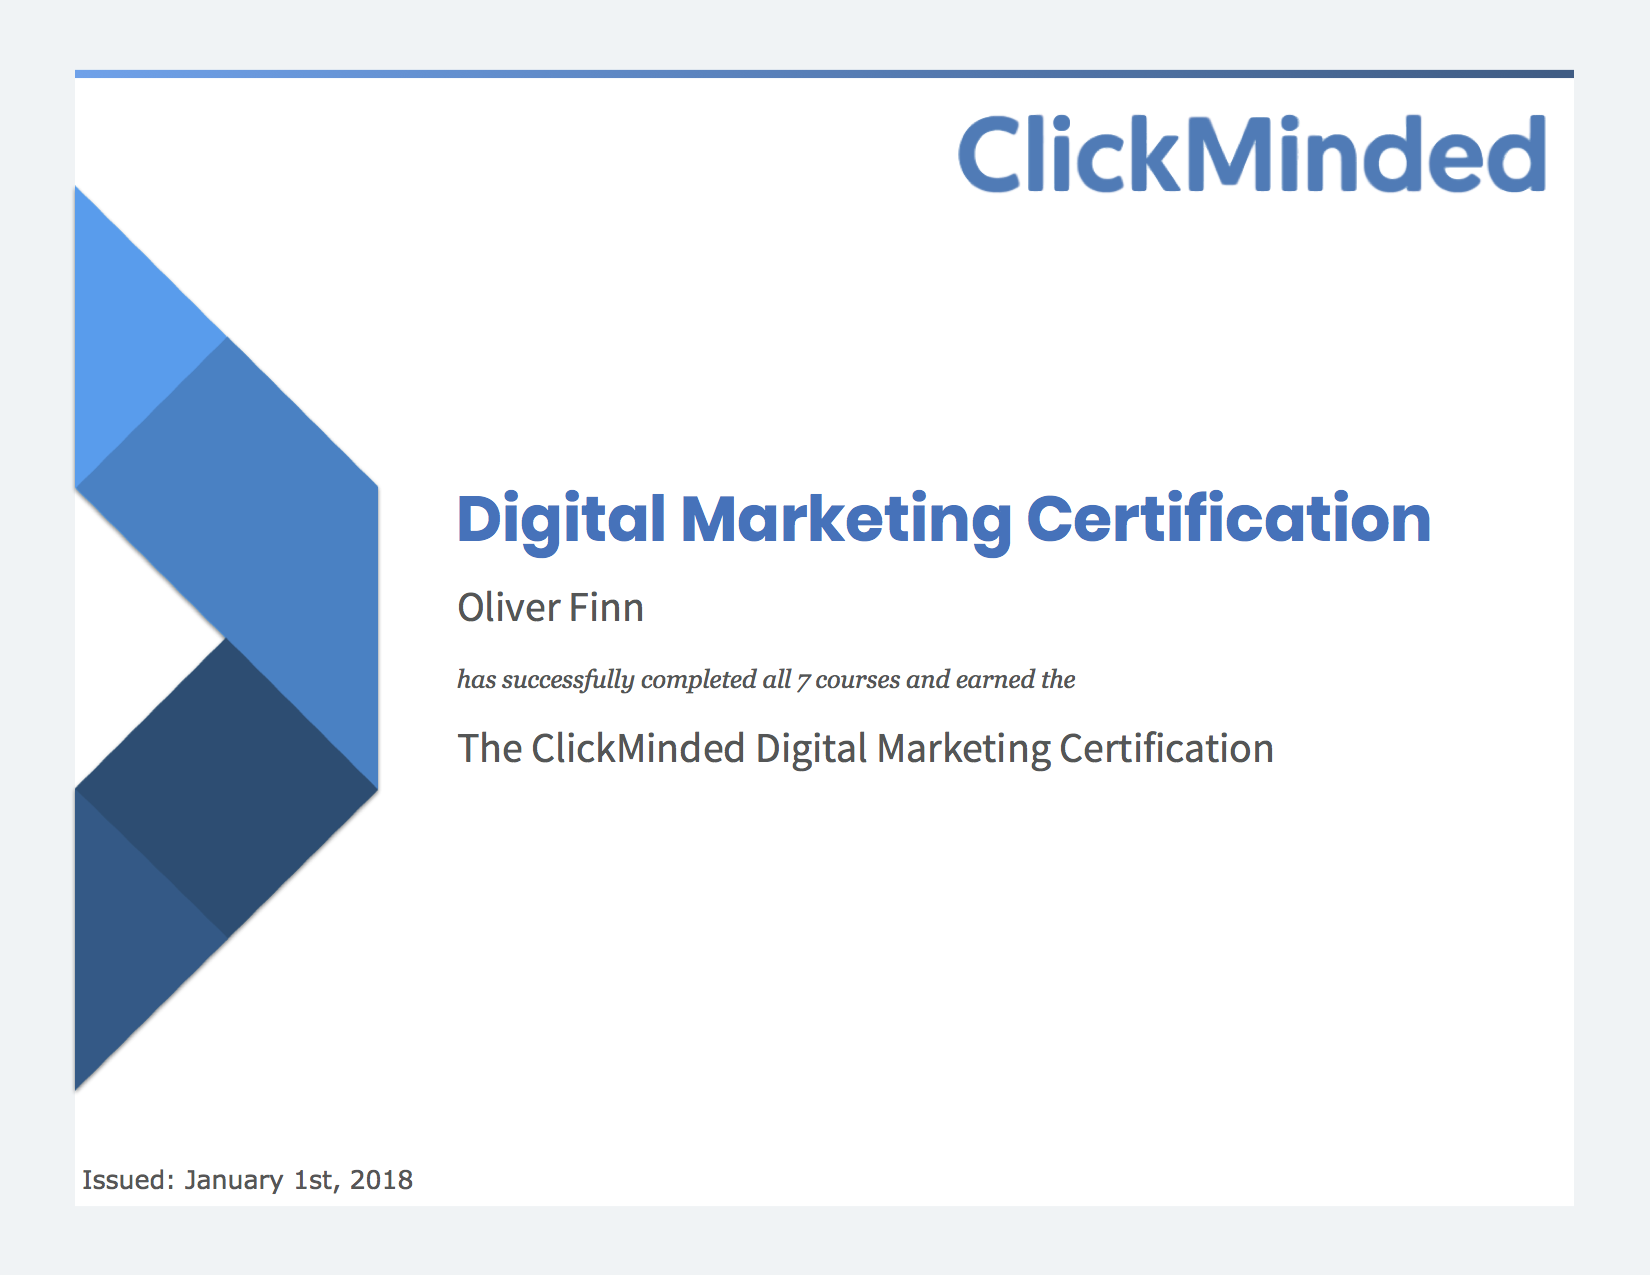 Сертификация рынок. Сертификат стартап. Сертификат по маркетингу. Сертификат маркетолога. Generally accepted marketing and Certification Standards.